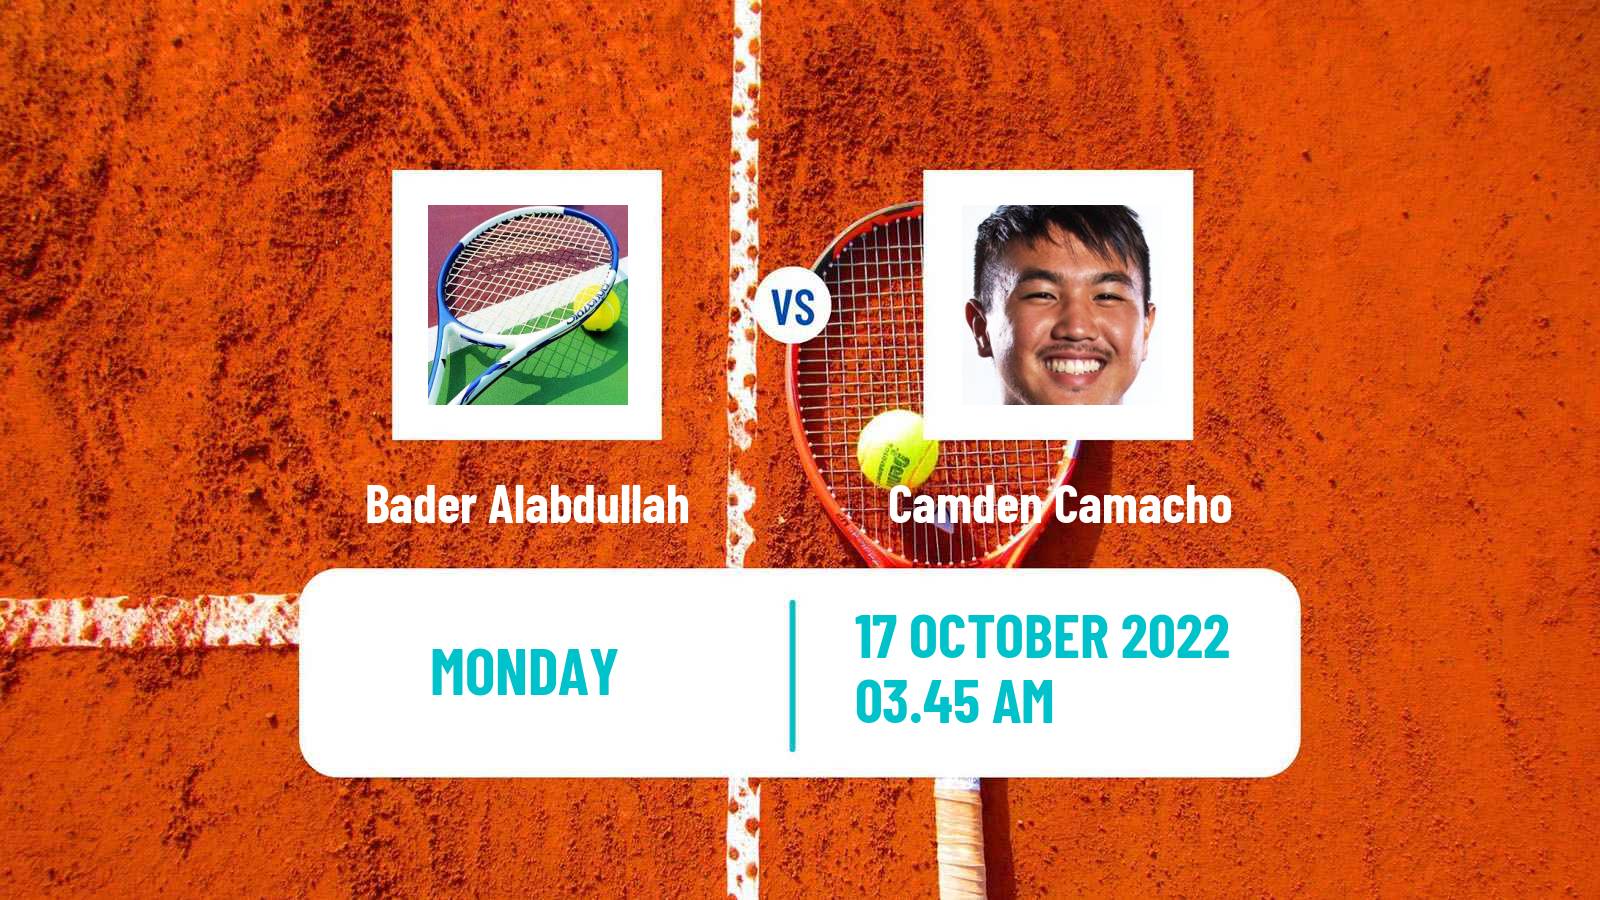 Tennis Davis Cup Group IV Bader Alabdullah - Camden Camacho